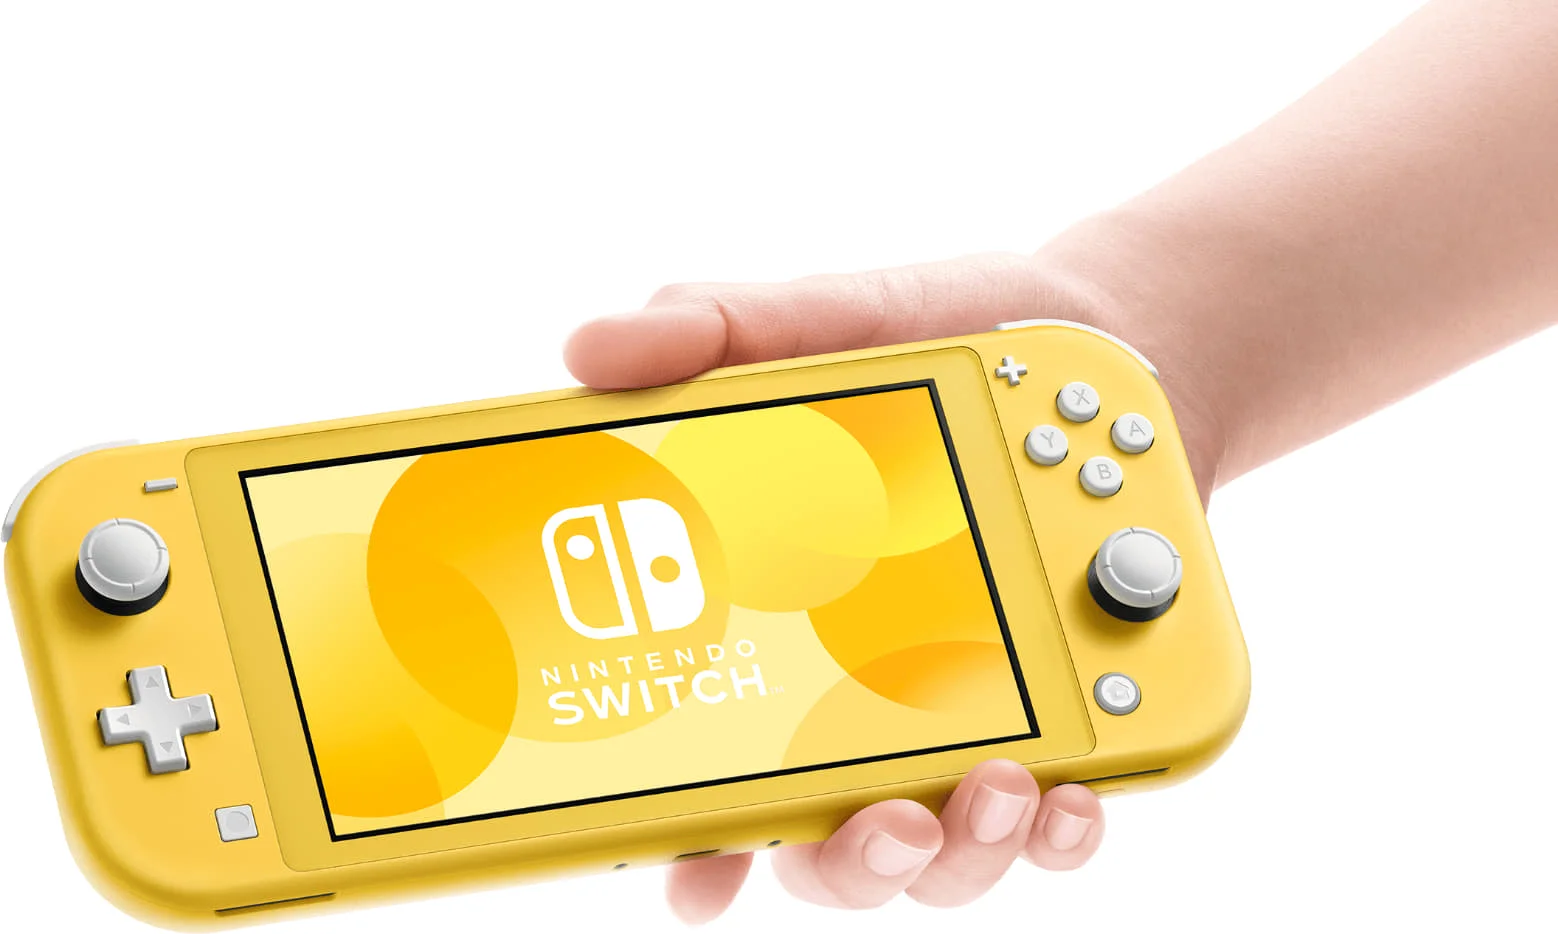 CV | New Nintendo Switch Model - Switch LITE announced!